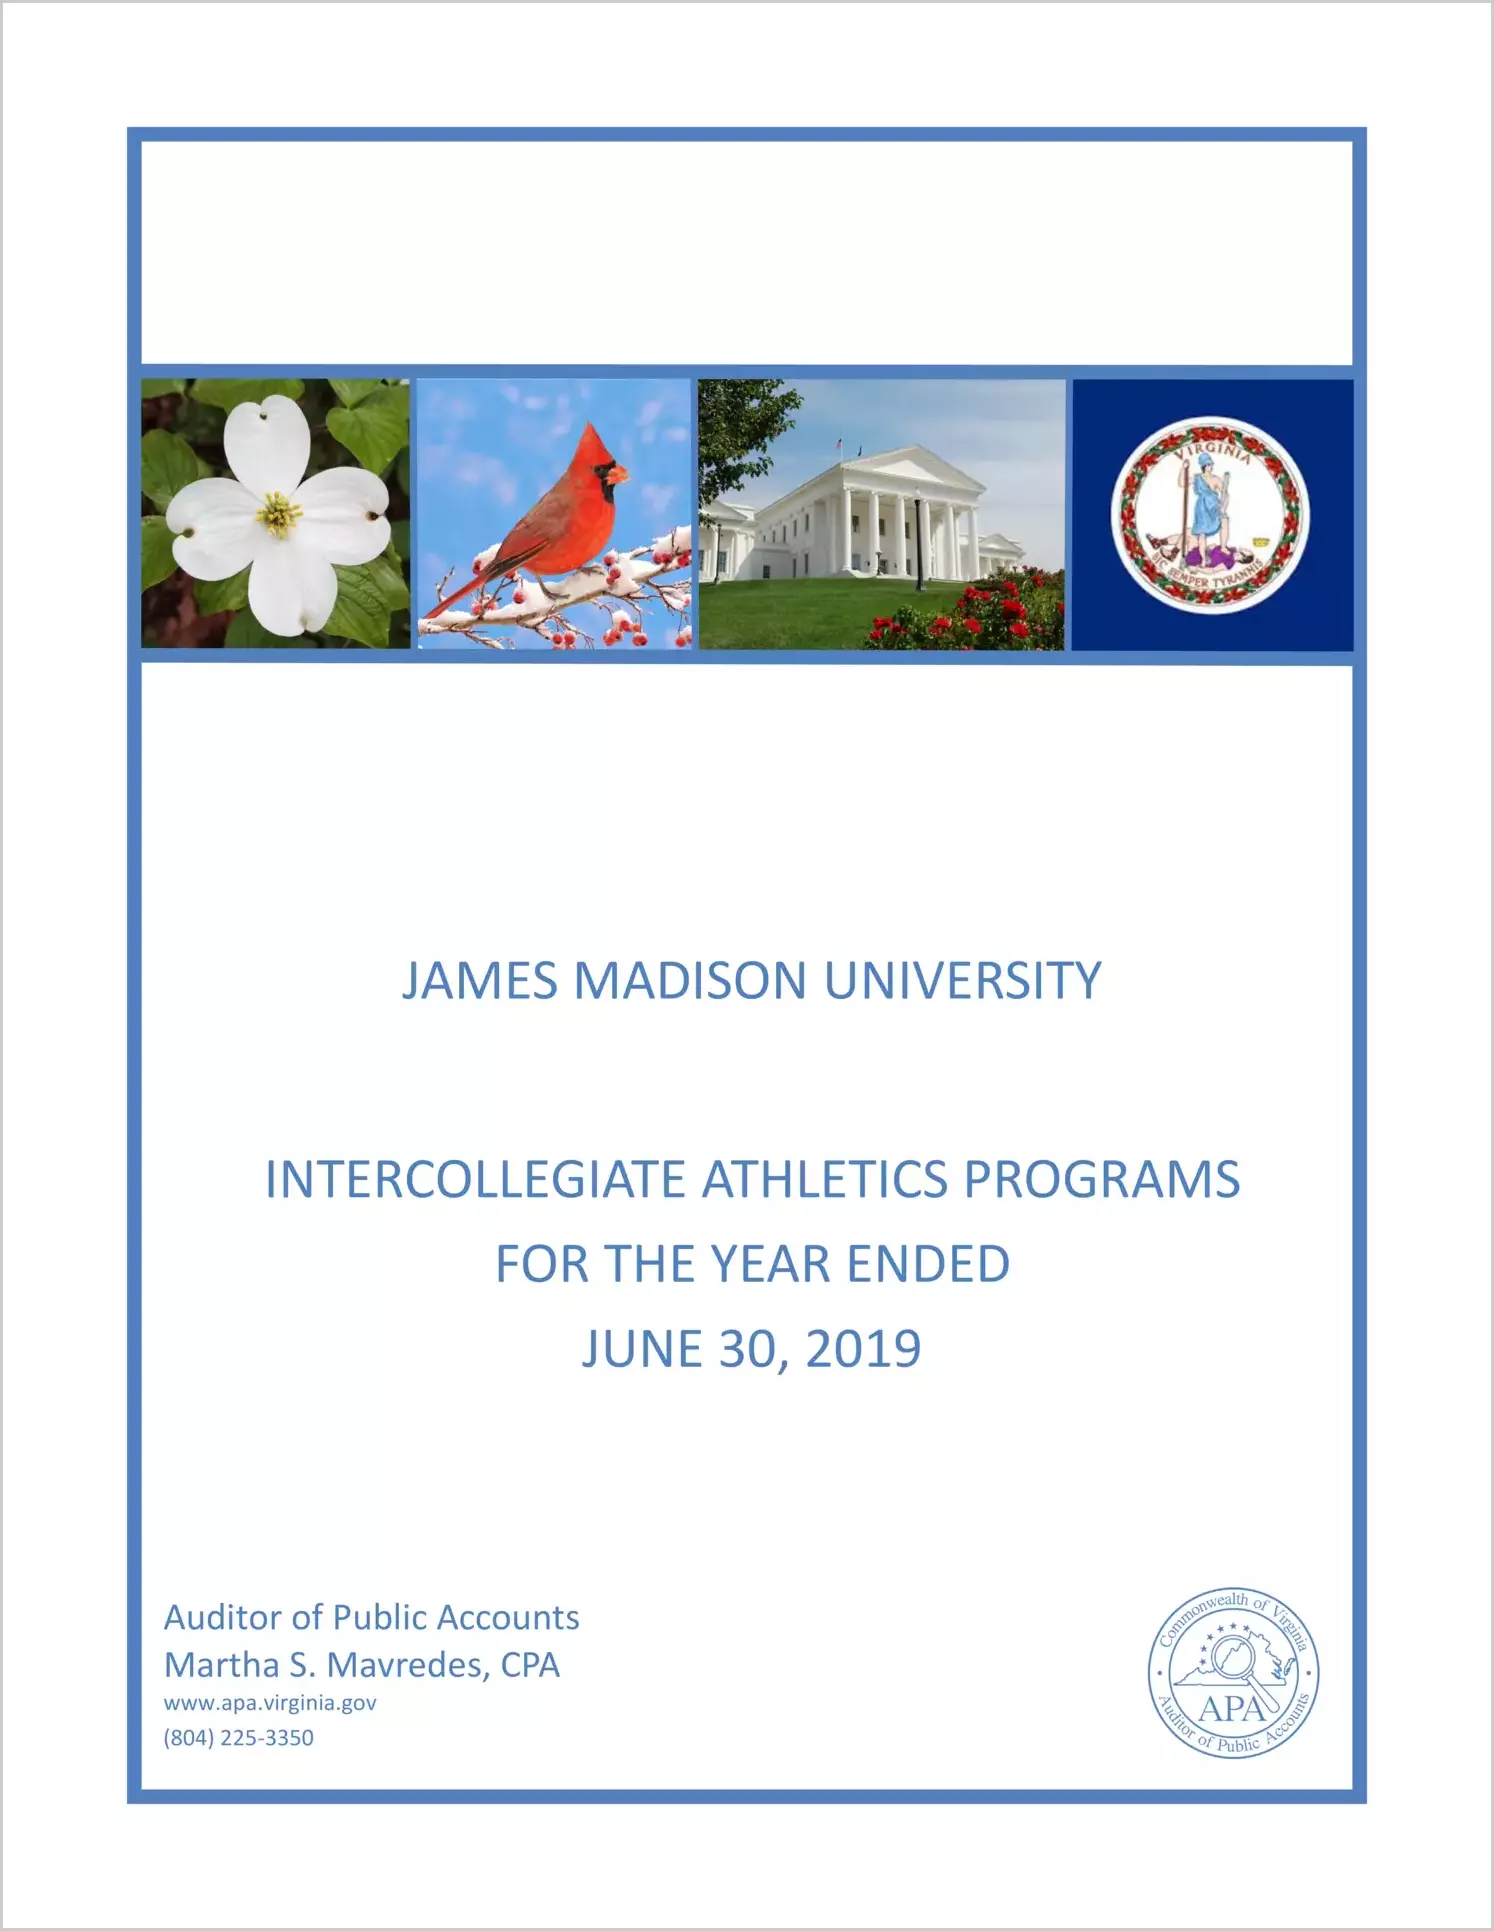 James Madison University Intercollegiate Athletics Programs for the year ended June 30, 2019